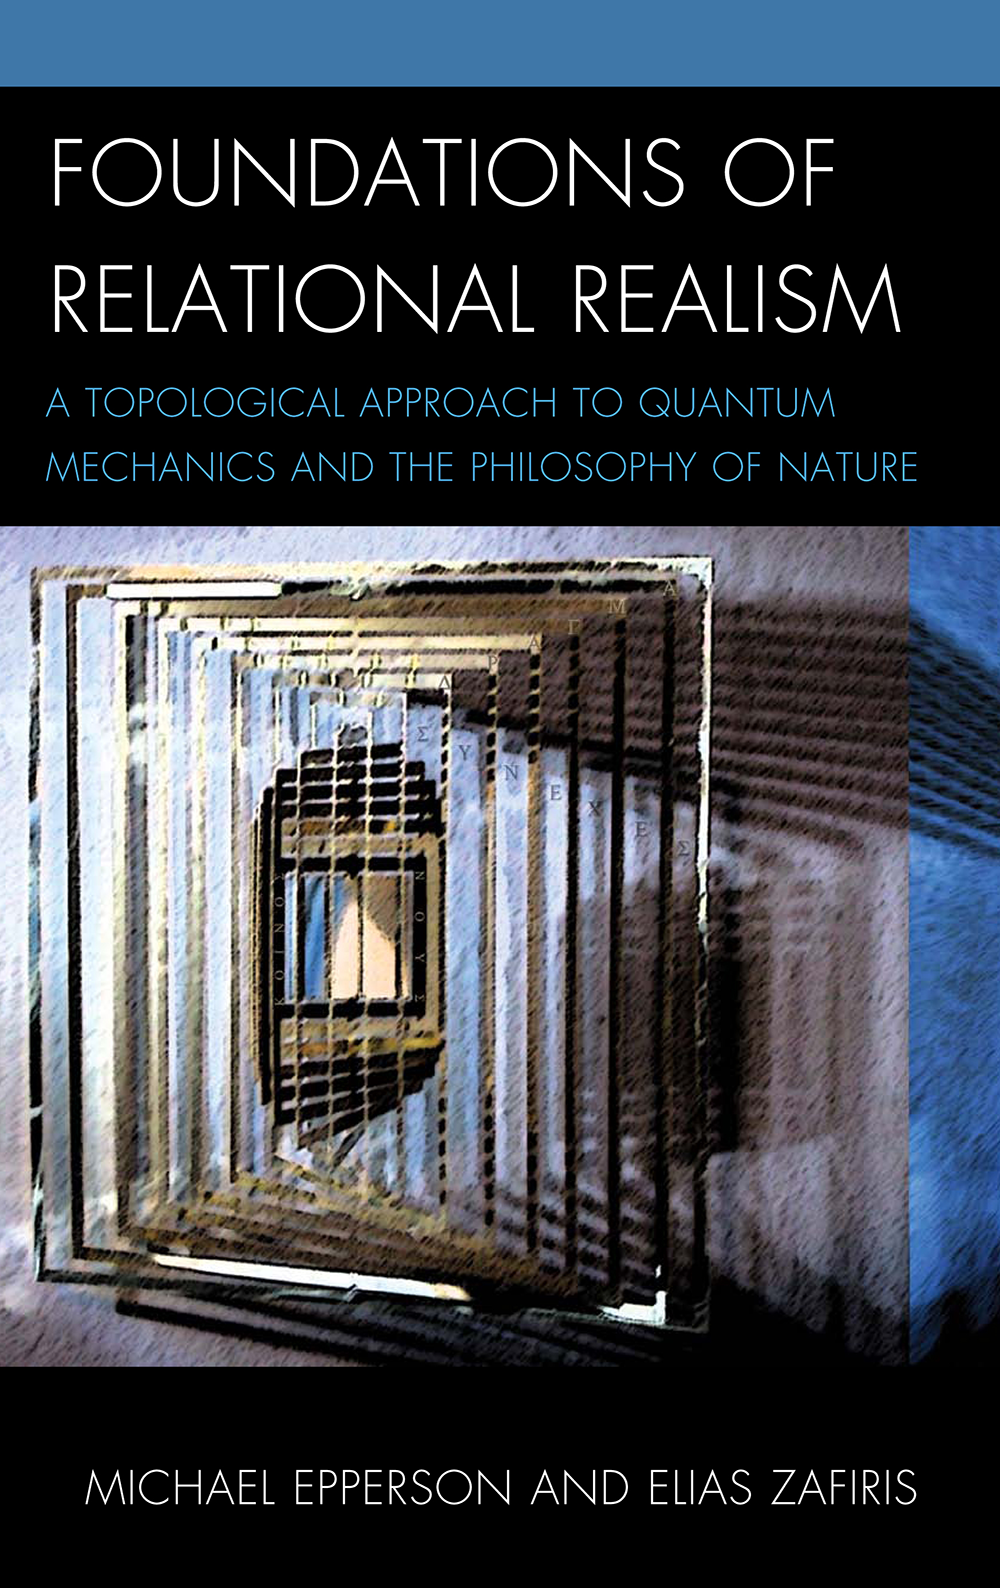 Foundations of Relational Realism: A Topological Approach to Quantum Mechanics - Michael Epperson & Elias Zafiris